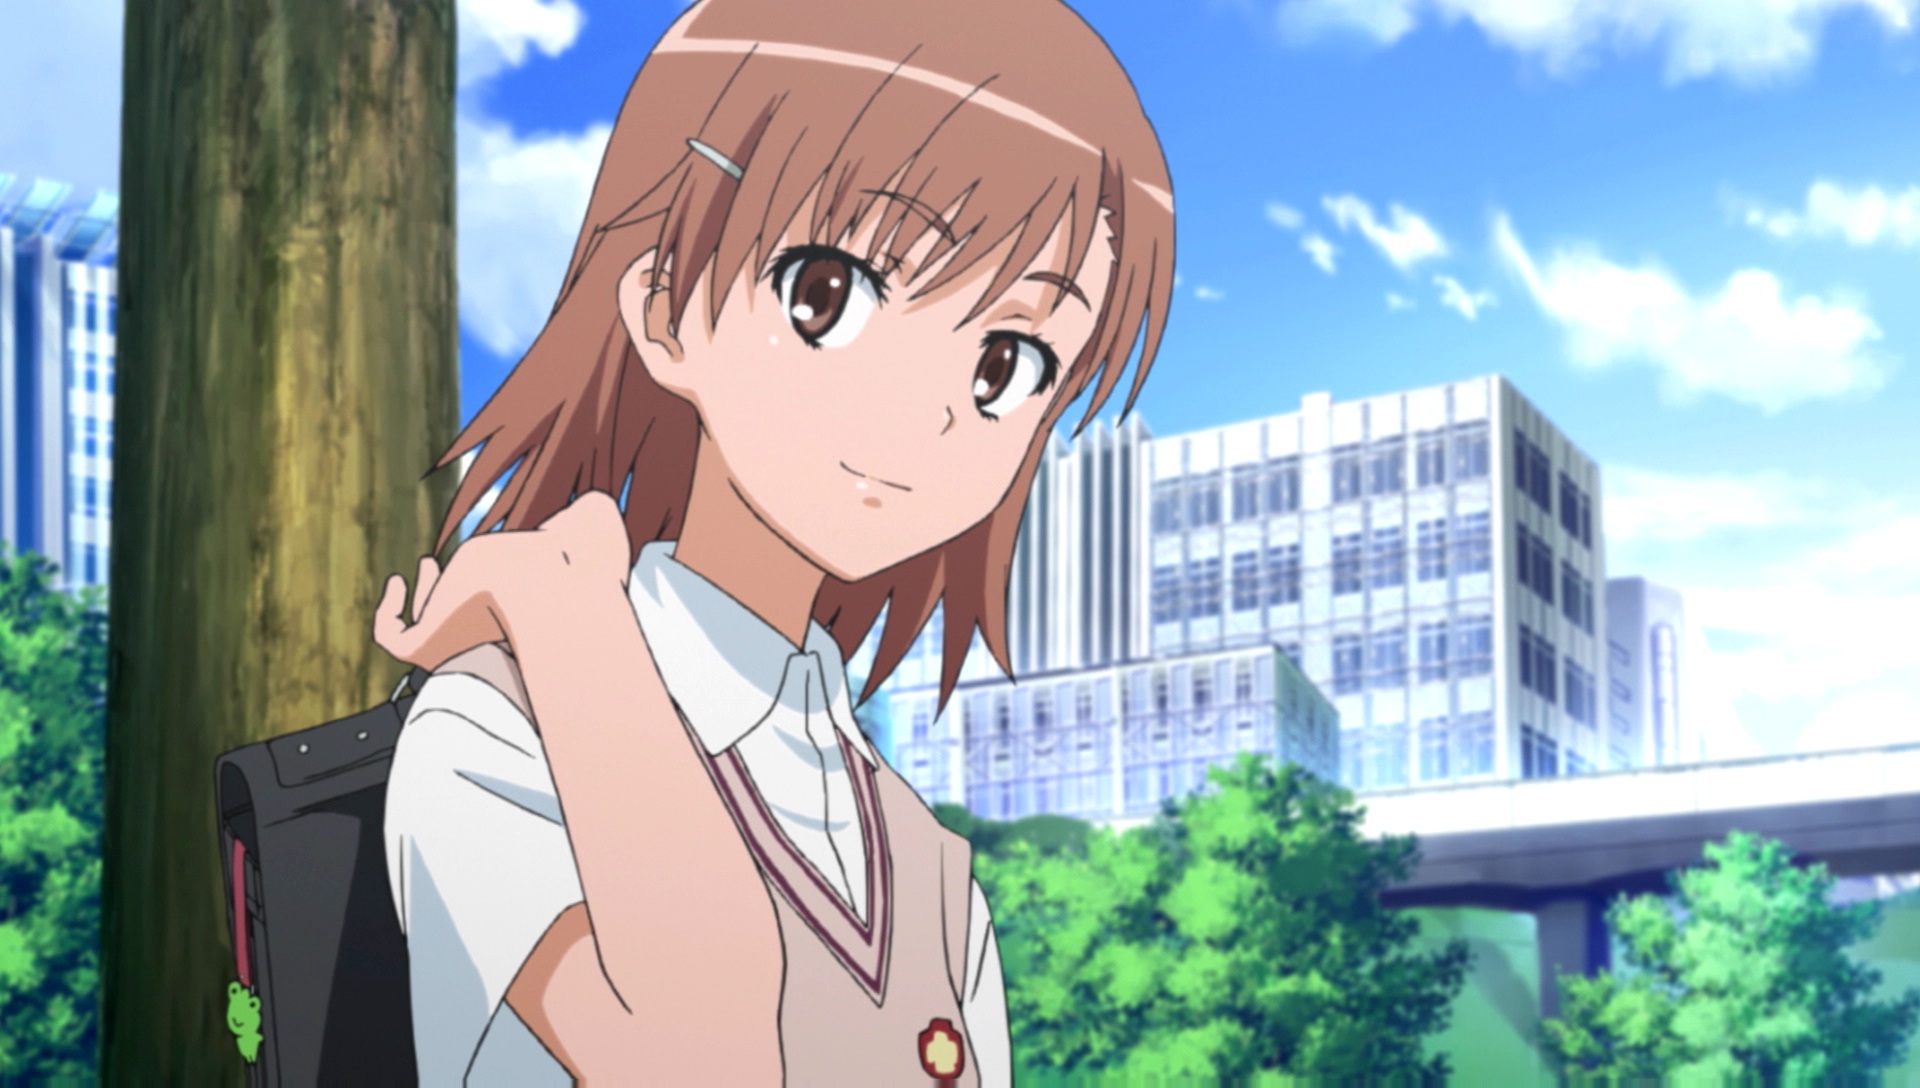 Watch A Certain Scientific Railgun Season 1 Episode 1 Sub & Dub | Anime